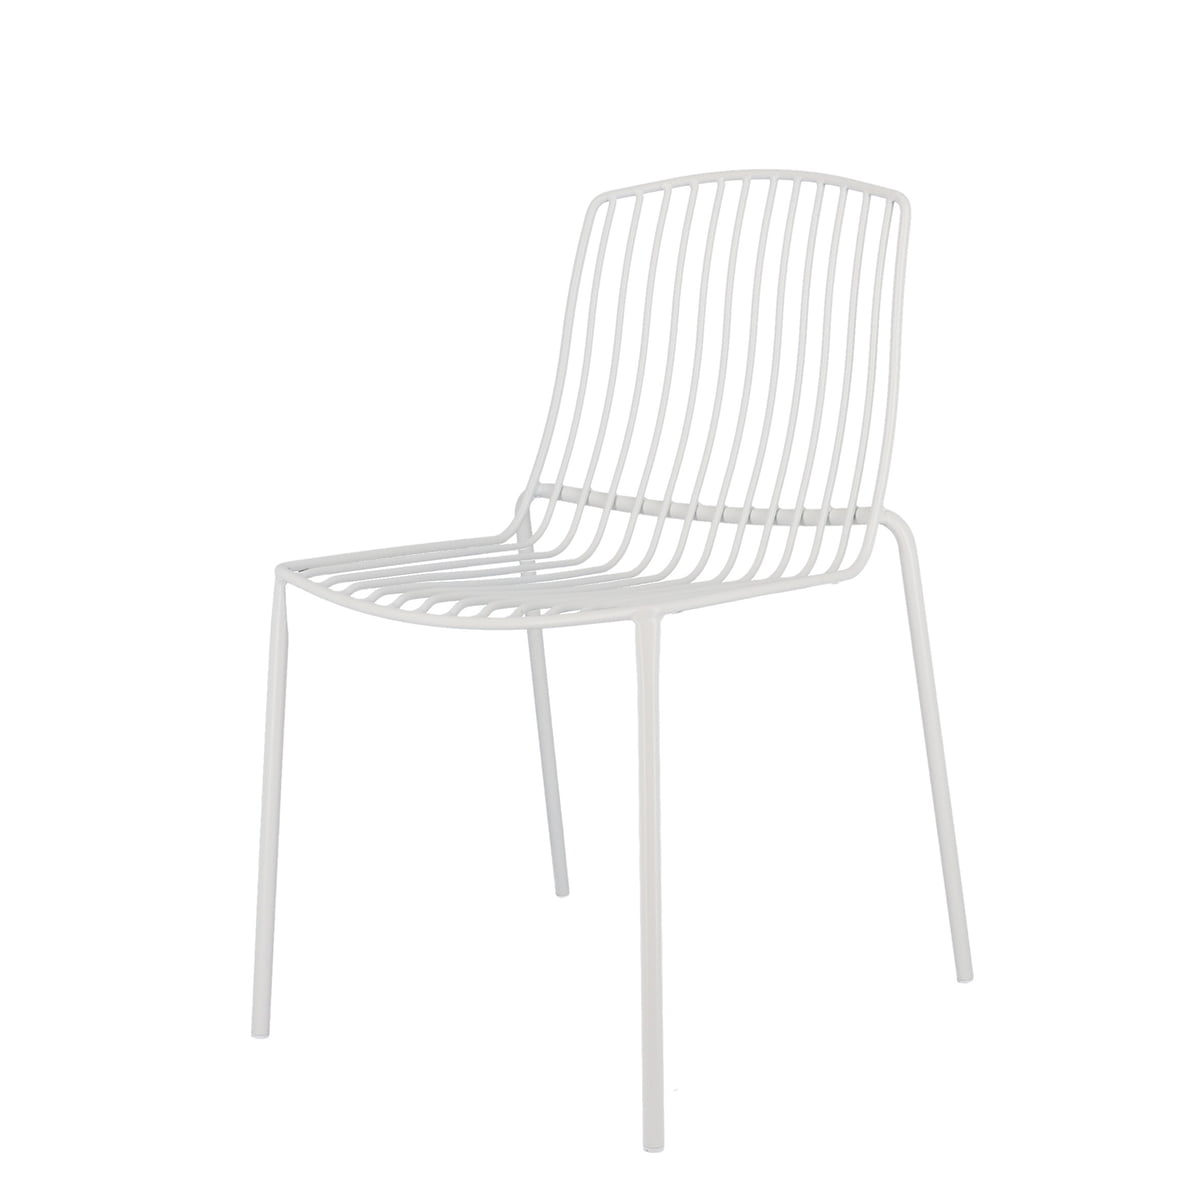 jan kurtz - mori chaise de jardin, blanc